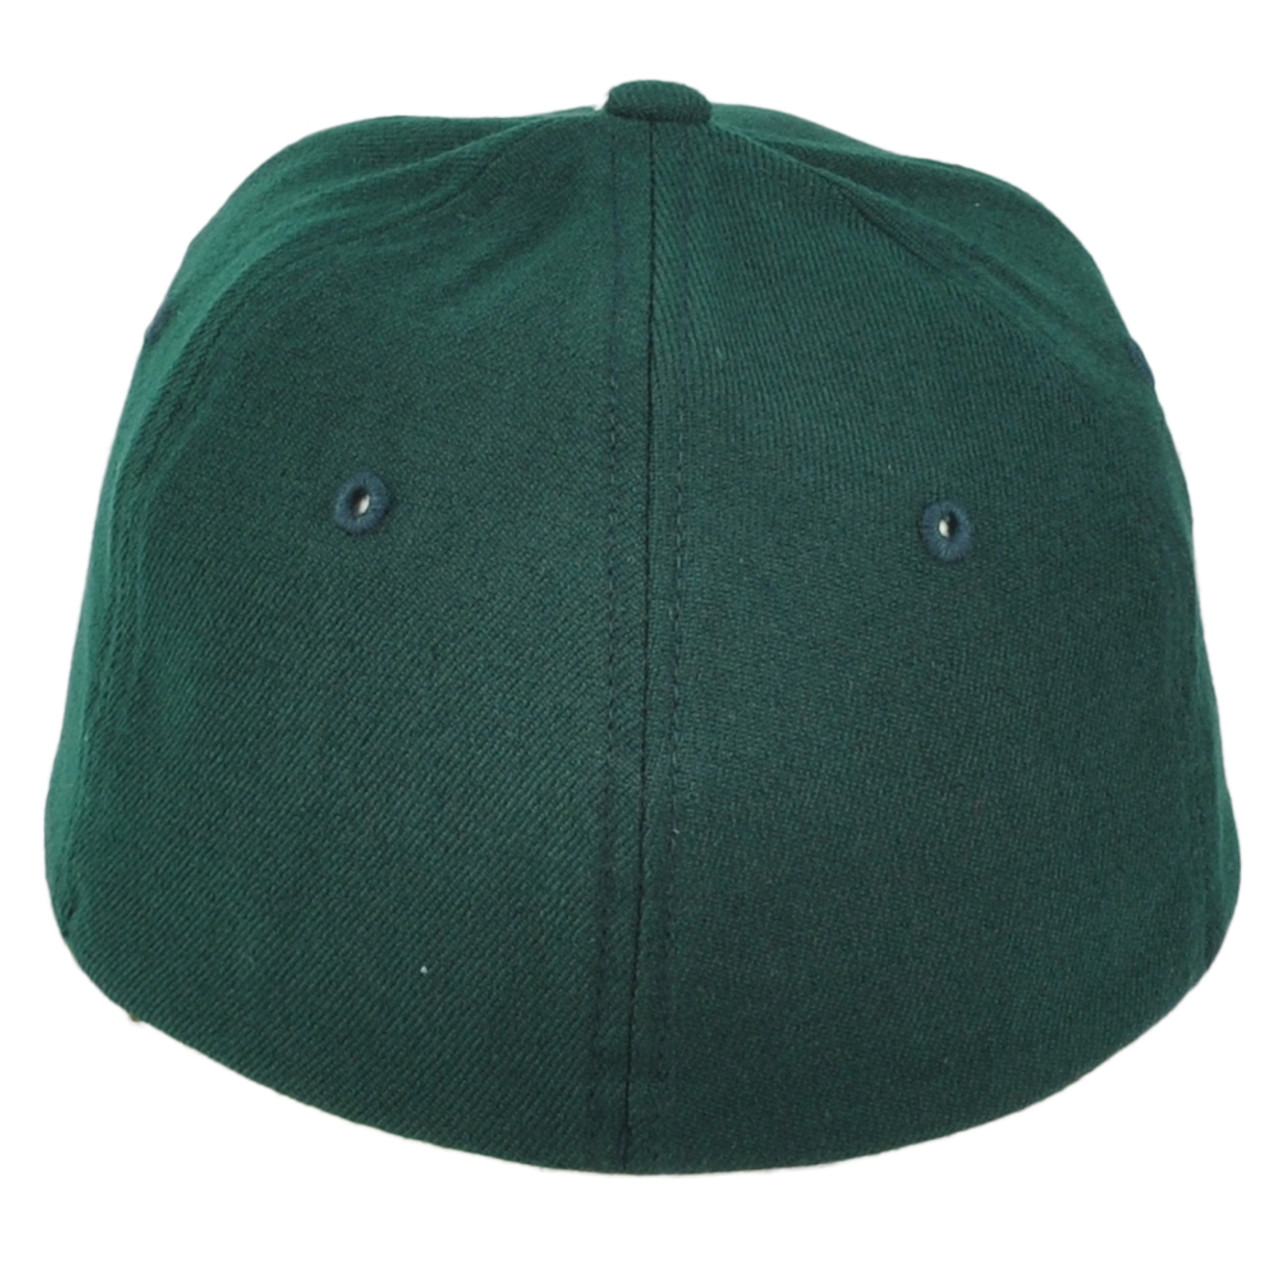 Zephyr Dark Forest Cap Flex Cap Stretch Store Bill - Medium/Large Blank Fit Flat Hat Green